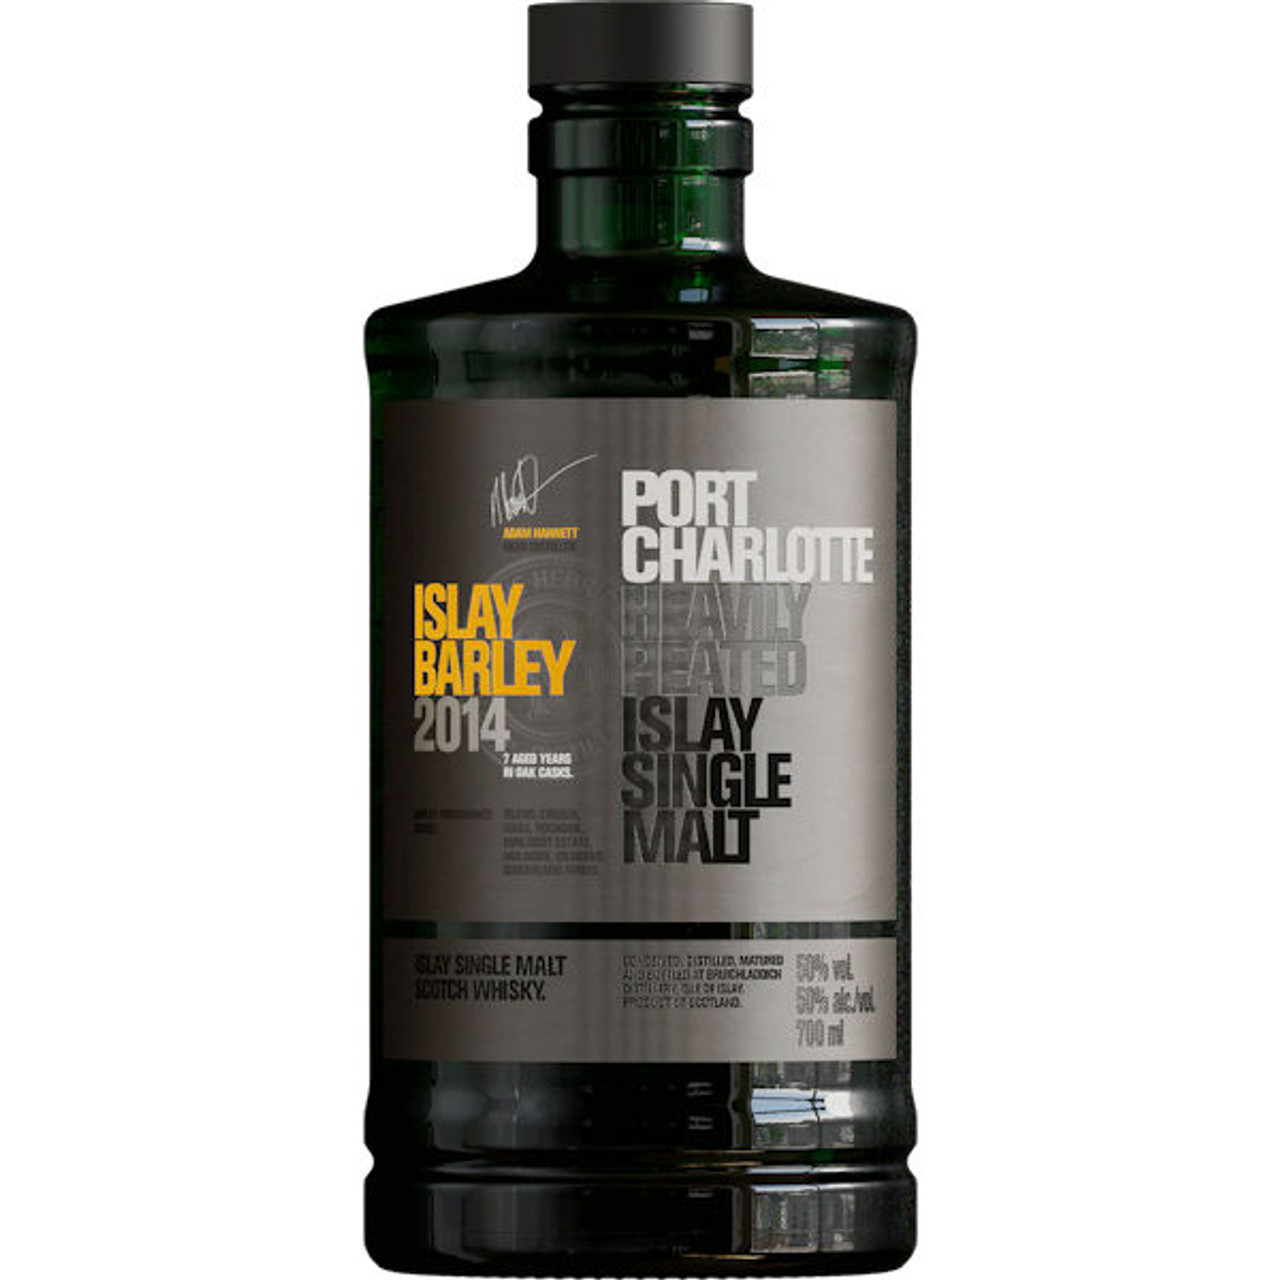 Whisky Review – Bruichladdich Port Charlotte Islay Barley